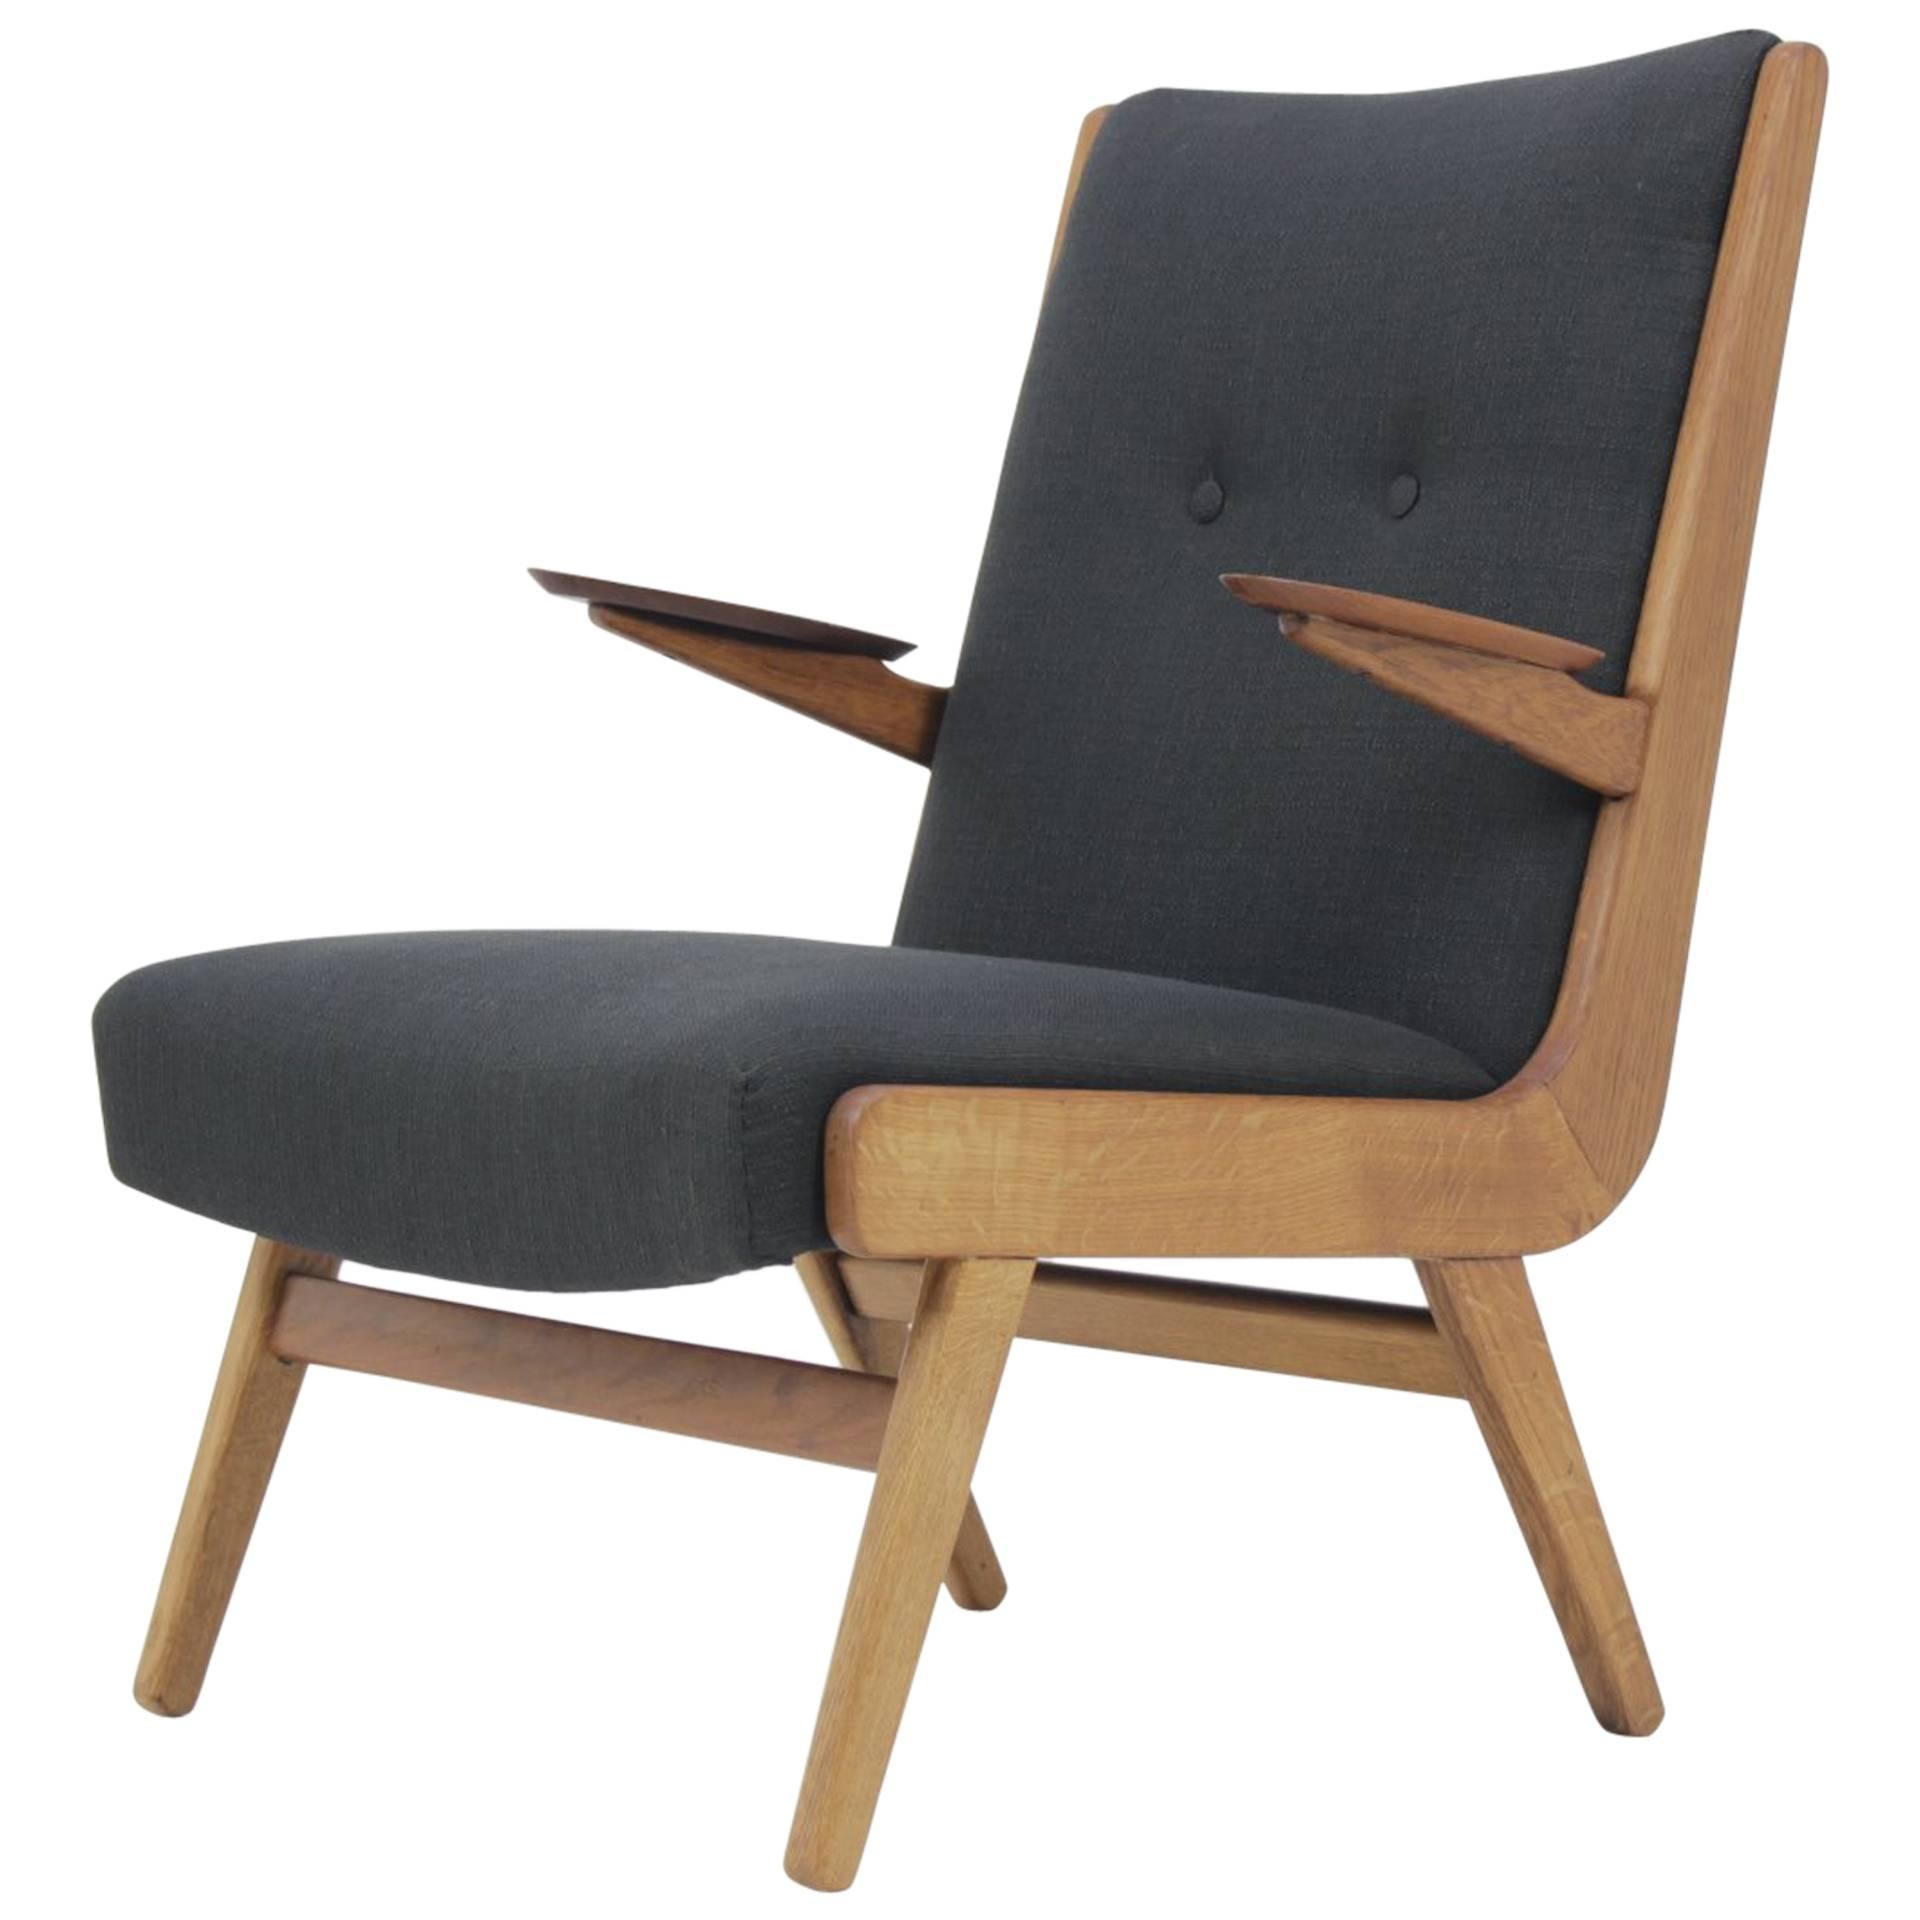 Danish Teak Easy Chair, 1960s